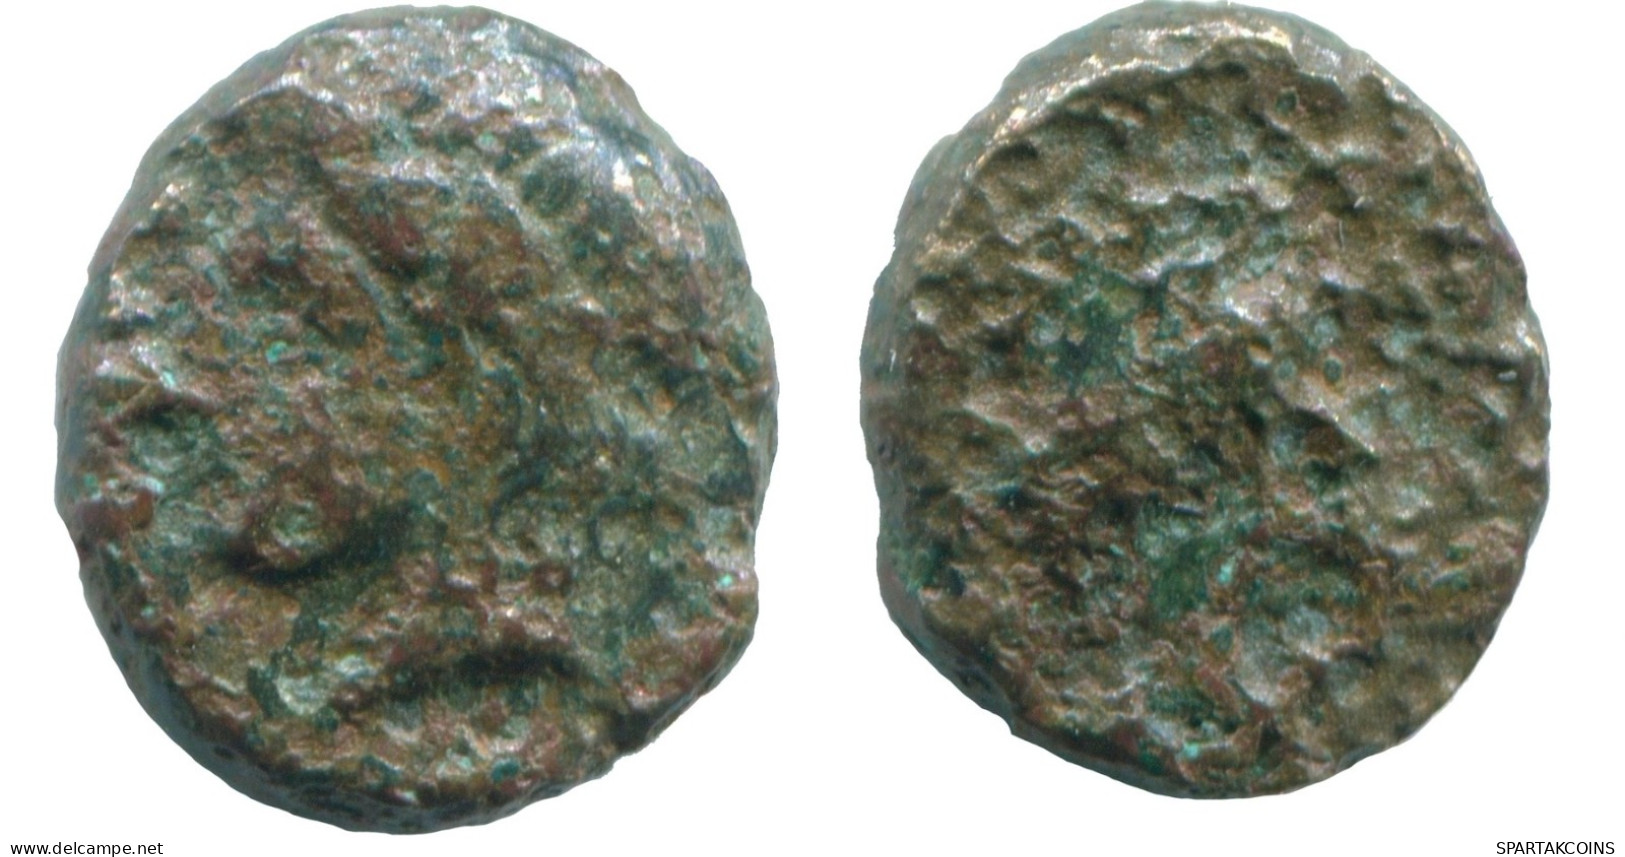 Authentic Original Ancient GREEK Coin #ANC12662.6.U.A - Greek